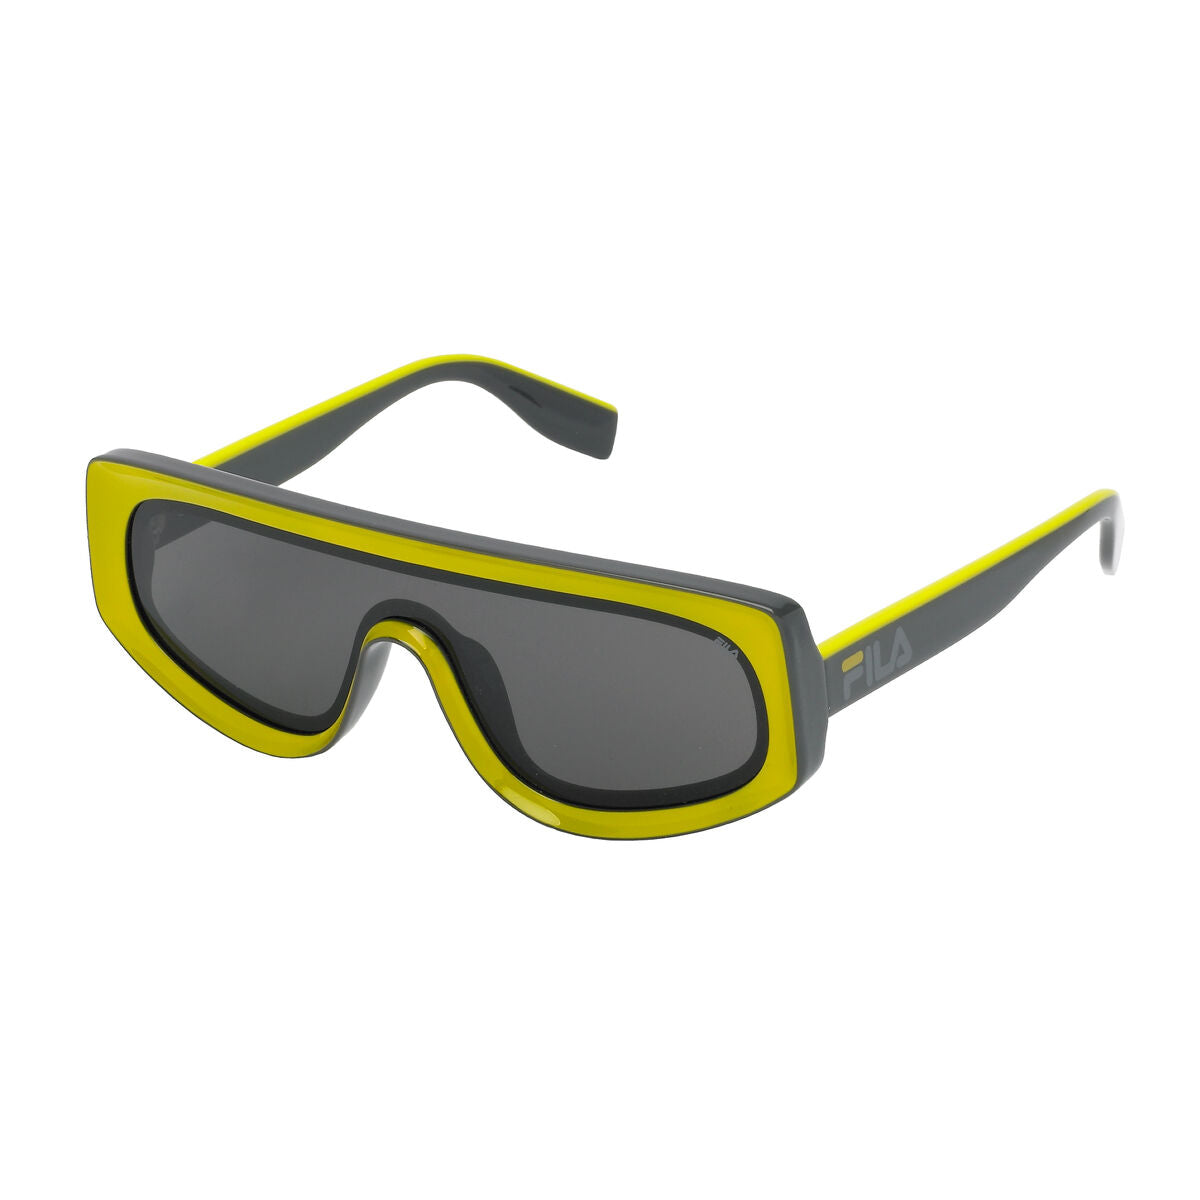 Men's Sunglasses Fila SF9417-990KAU